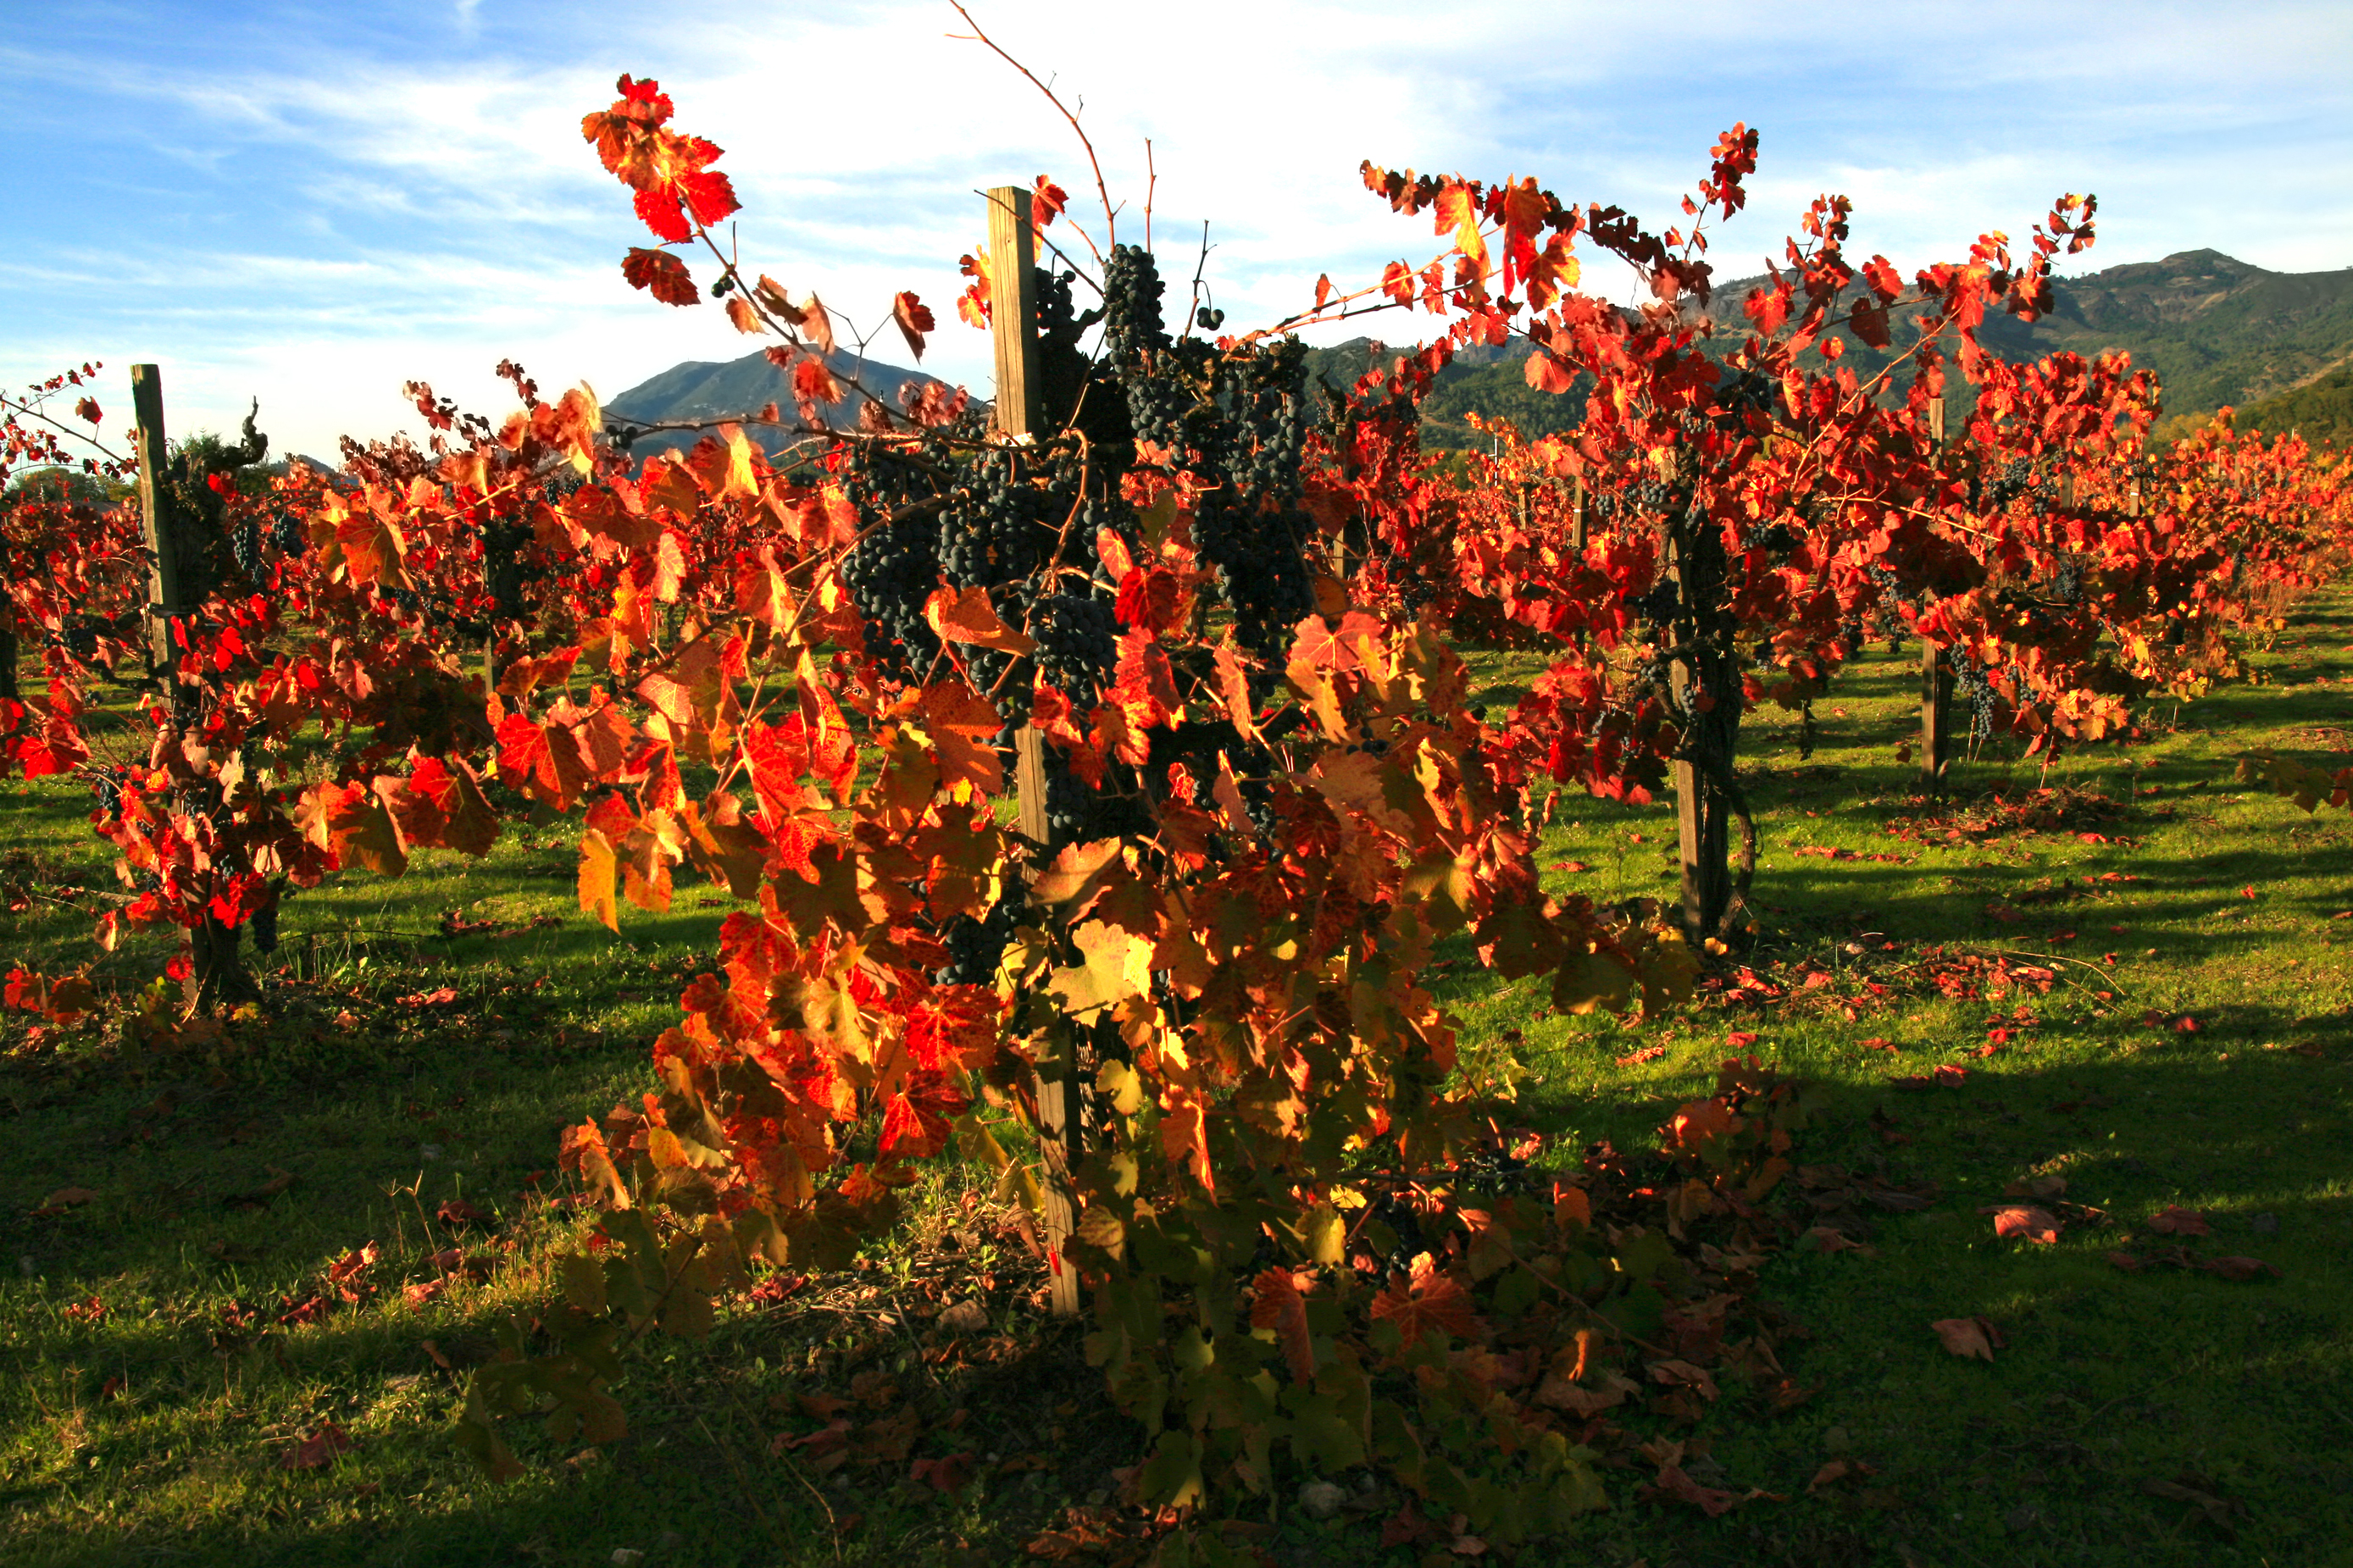 File:Vineyard in Napa Valley 3.jpg - Wikimedia Commons